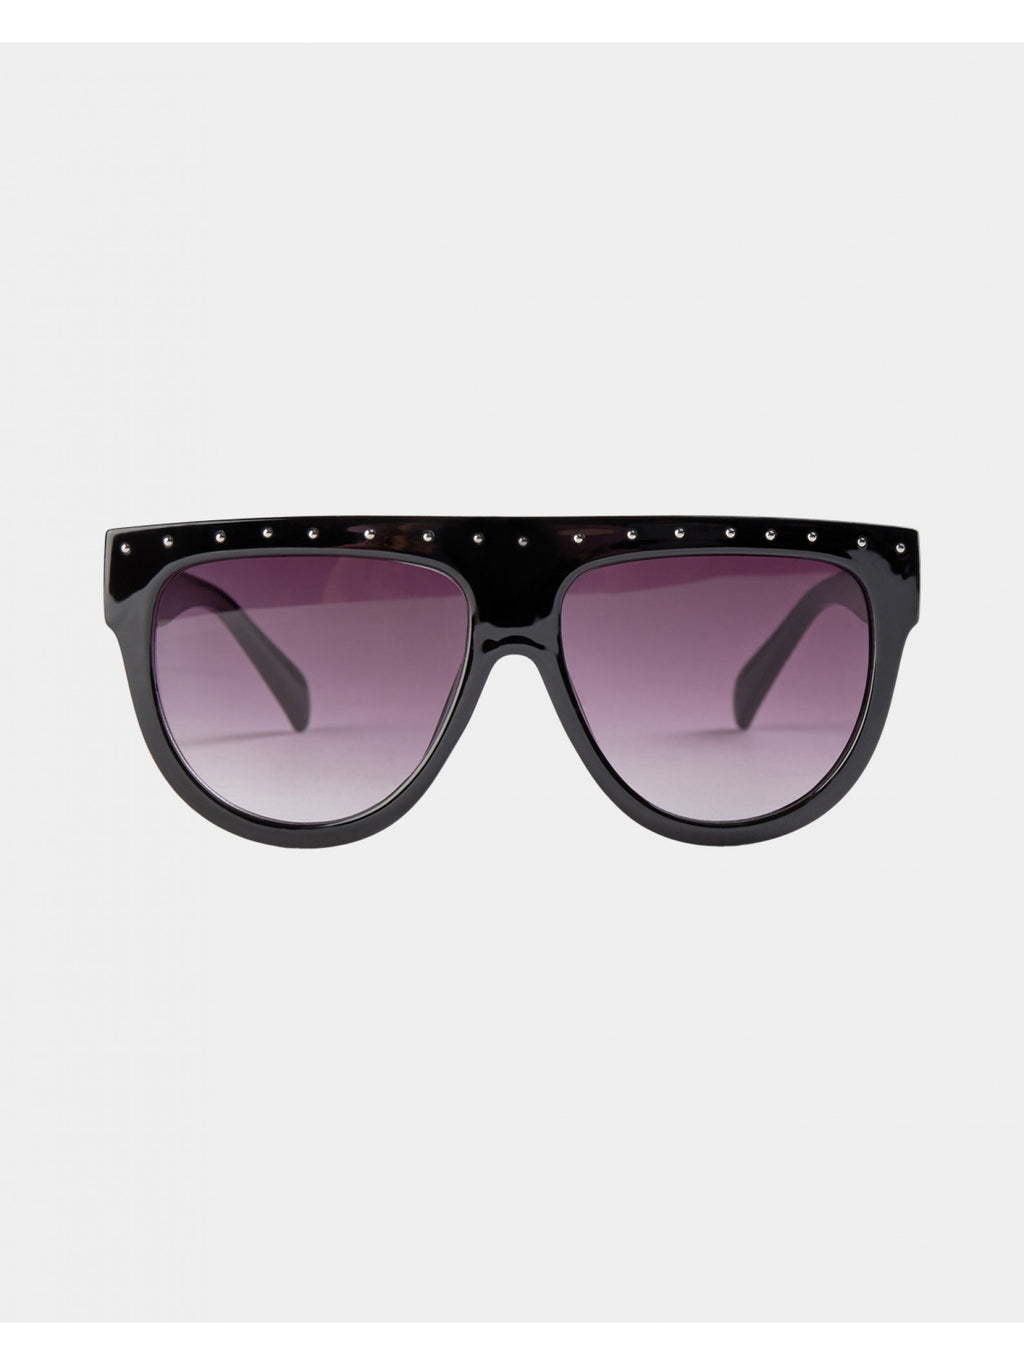 Sofie Schnoor Sunglasses - Black Stud